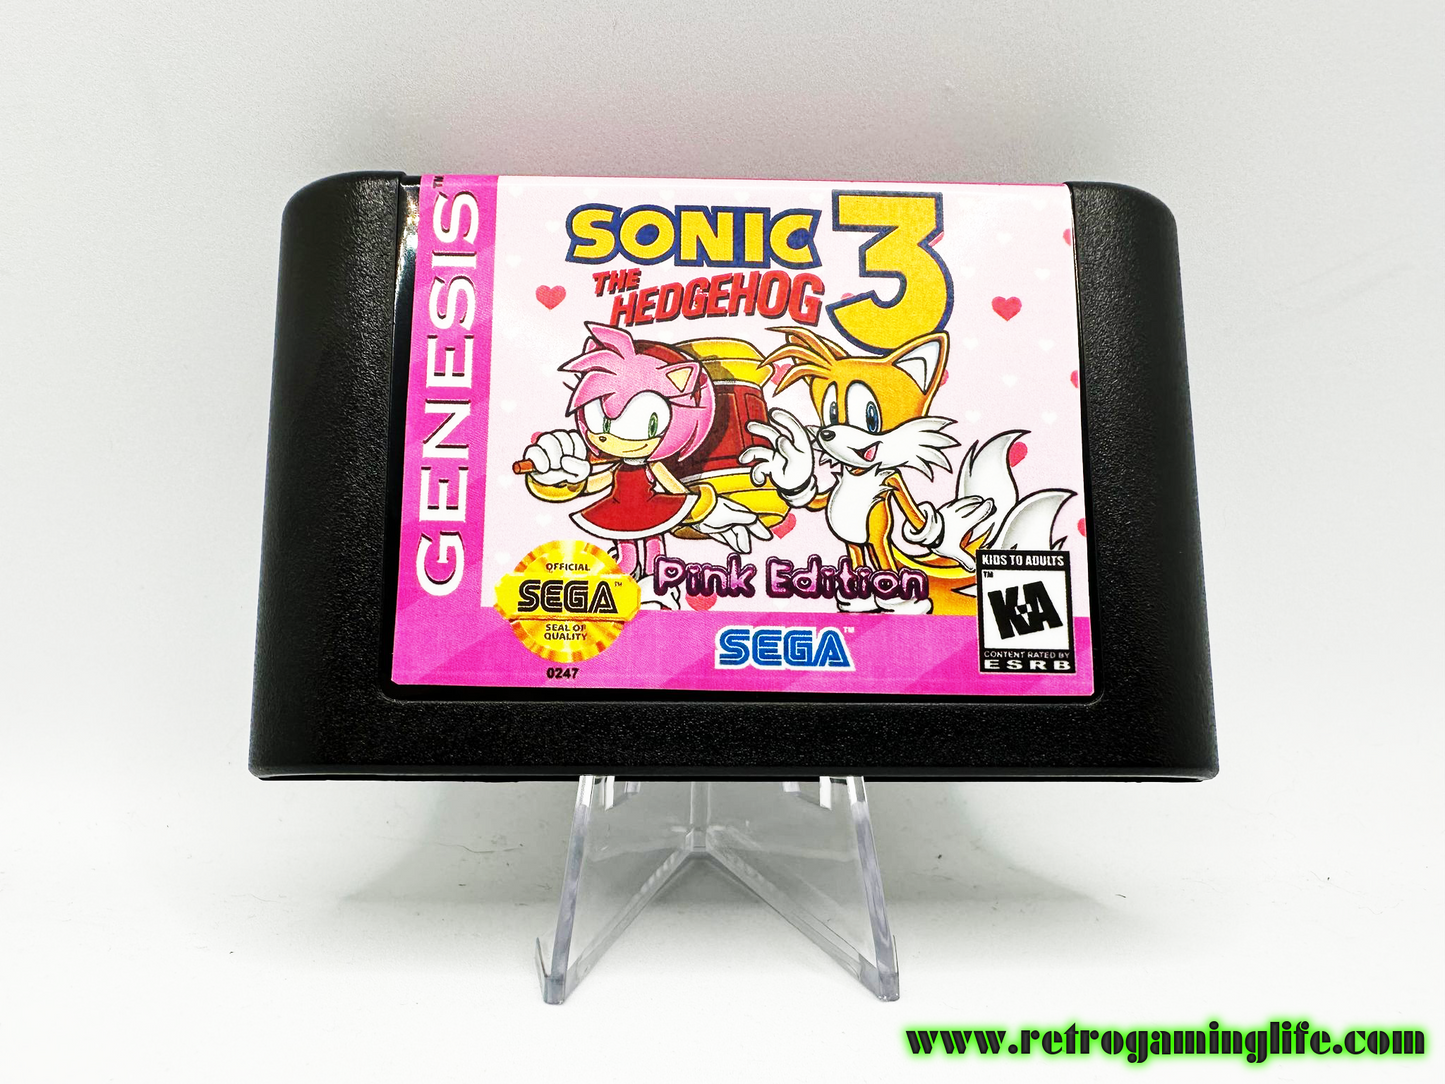 Sonic the Hedgehog 3 Pink Edition Sega Genesis Repro Game Cart